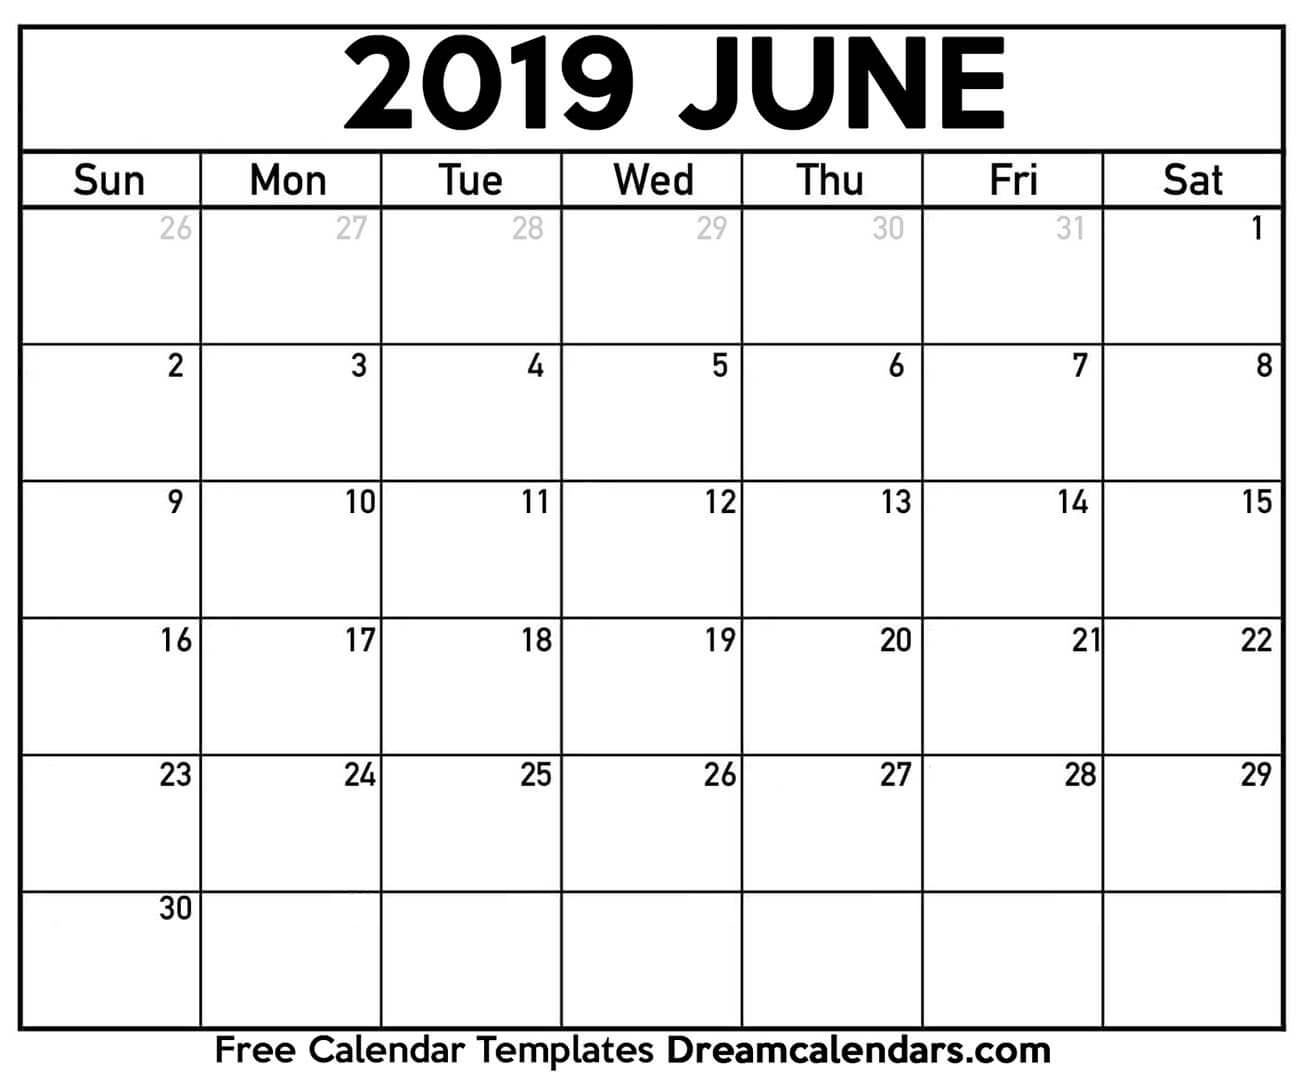 June 2019 Calendar | Free Blank Printable Templates